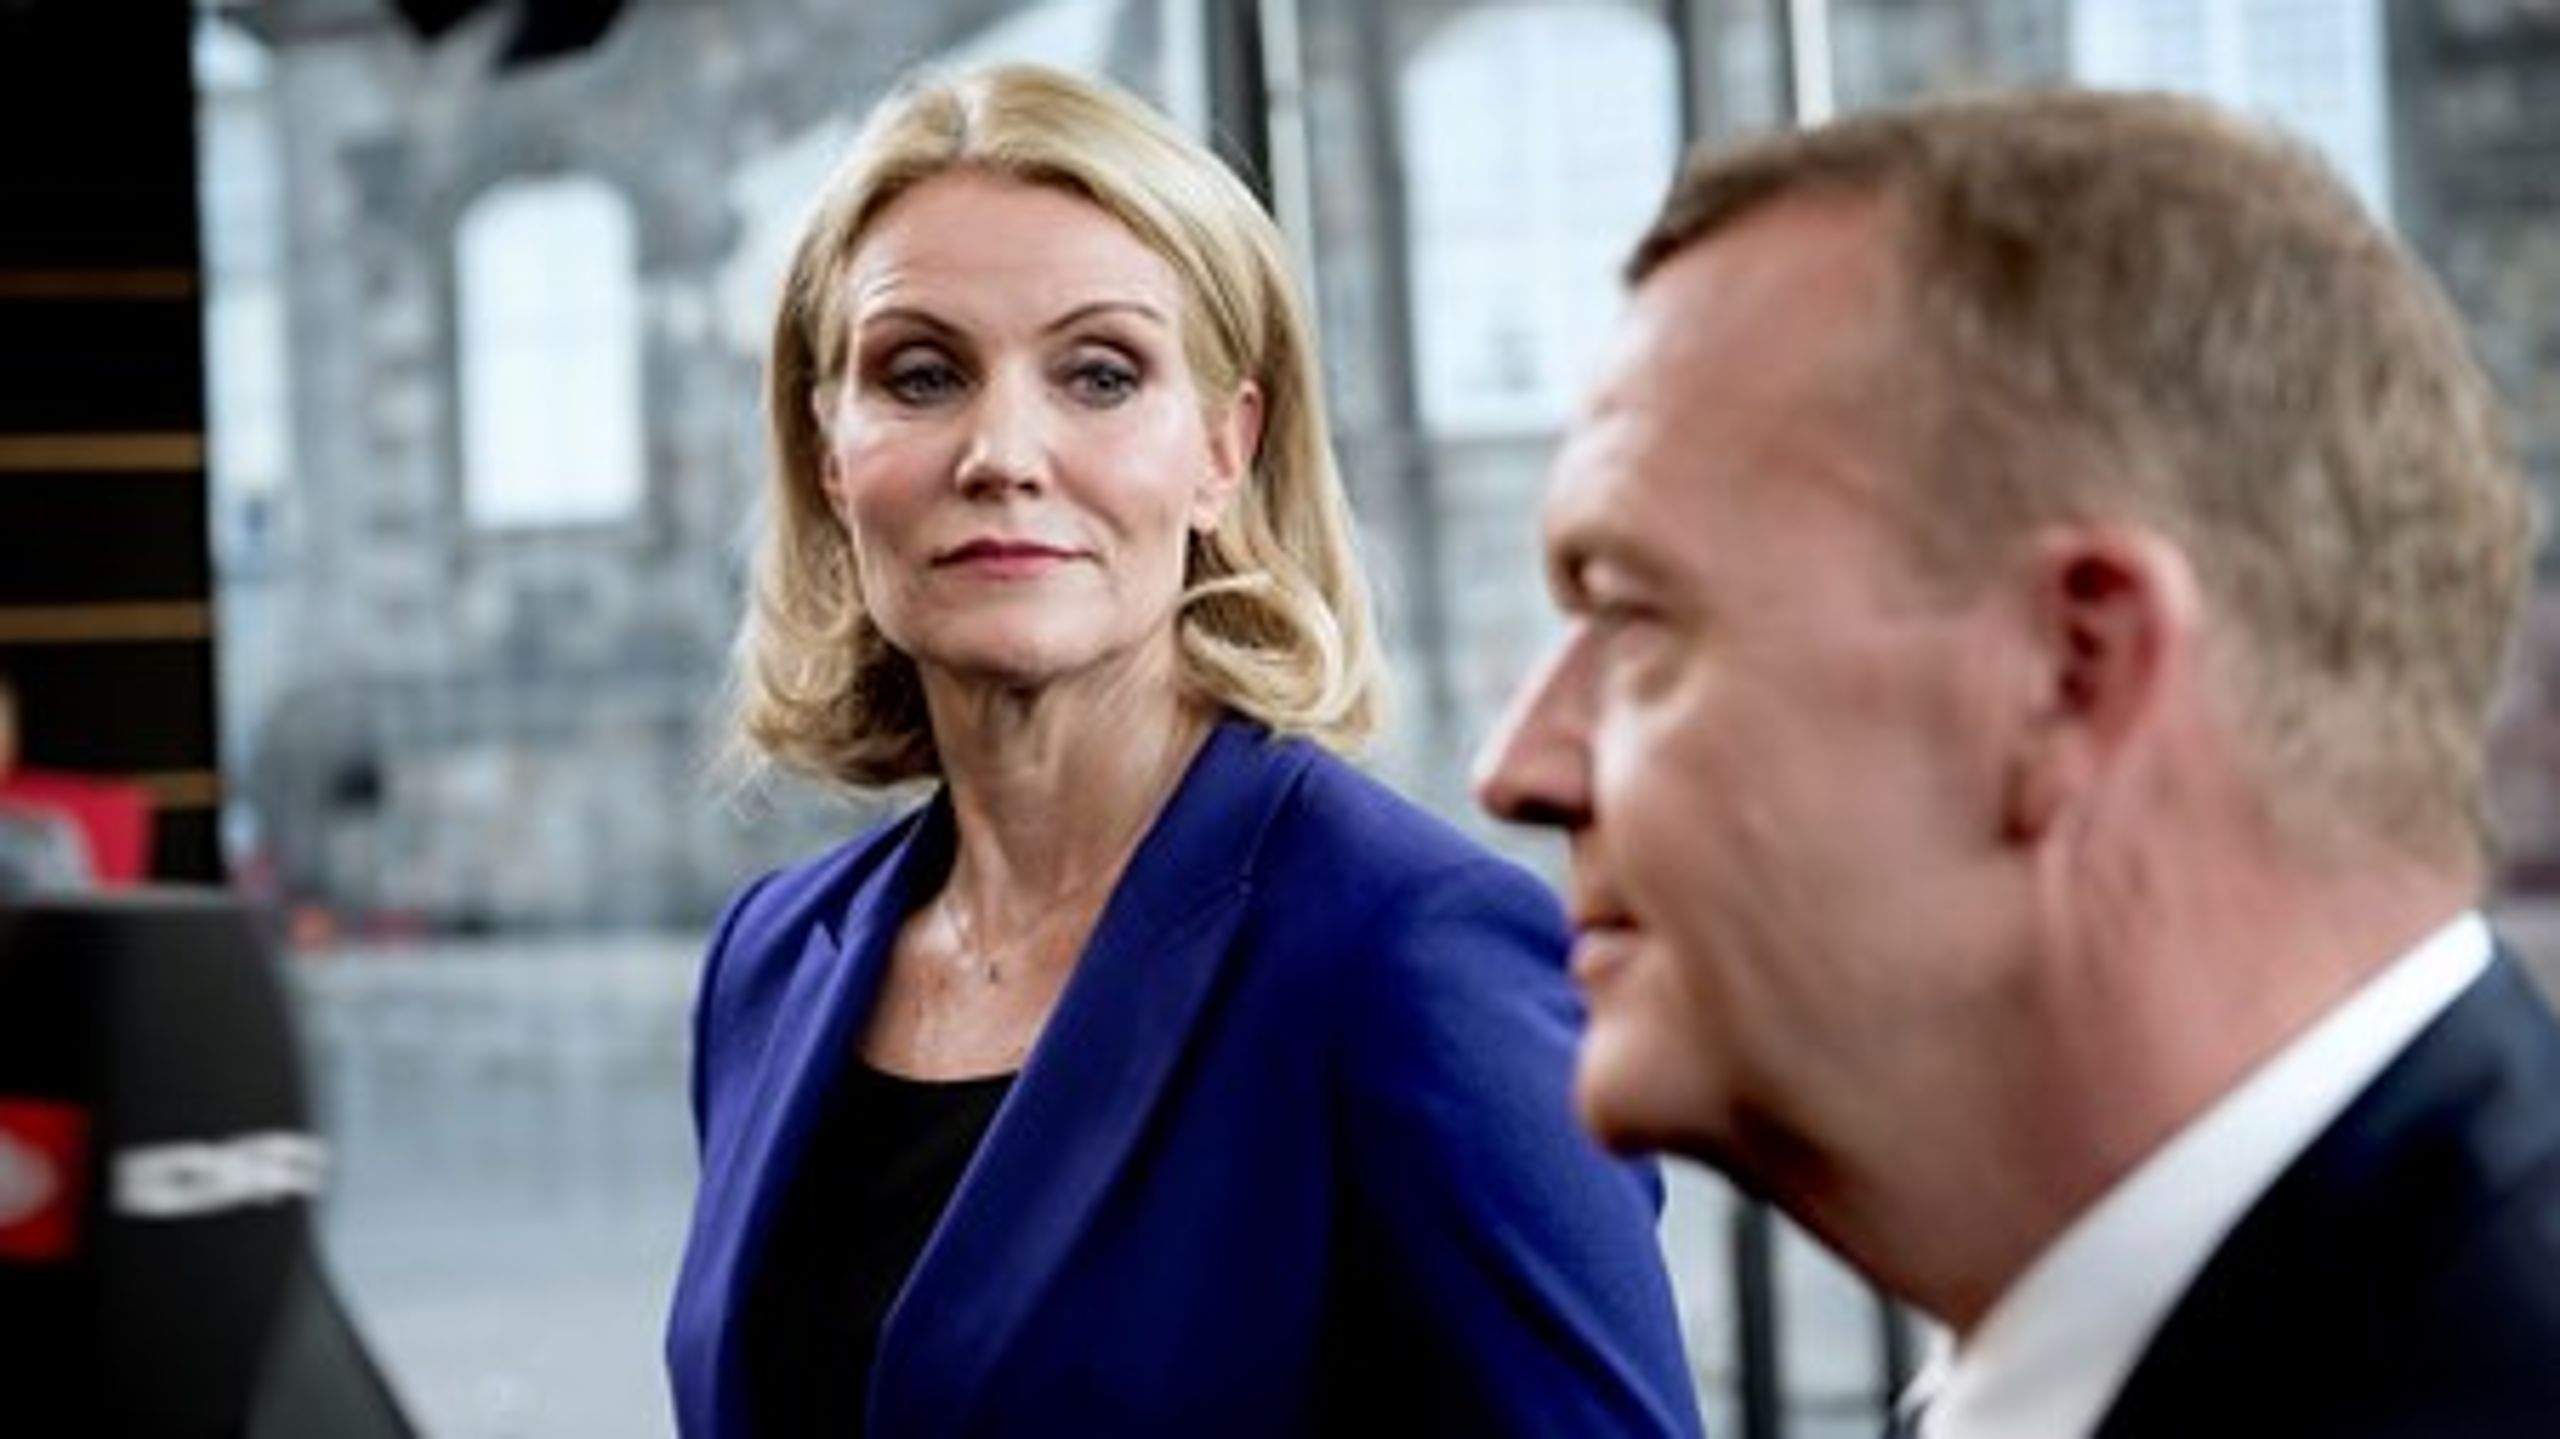 Hvem har æren for bedringen af dansk økonomi? Det var et centralt tema, da statsminister Helle Thorning-Schmidt (S) og Venstre-formand Lars Løkke Rasmussen var i debat på TV2 torsdag.<br>